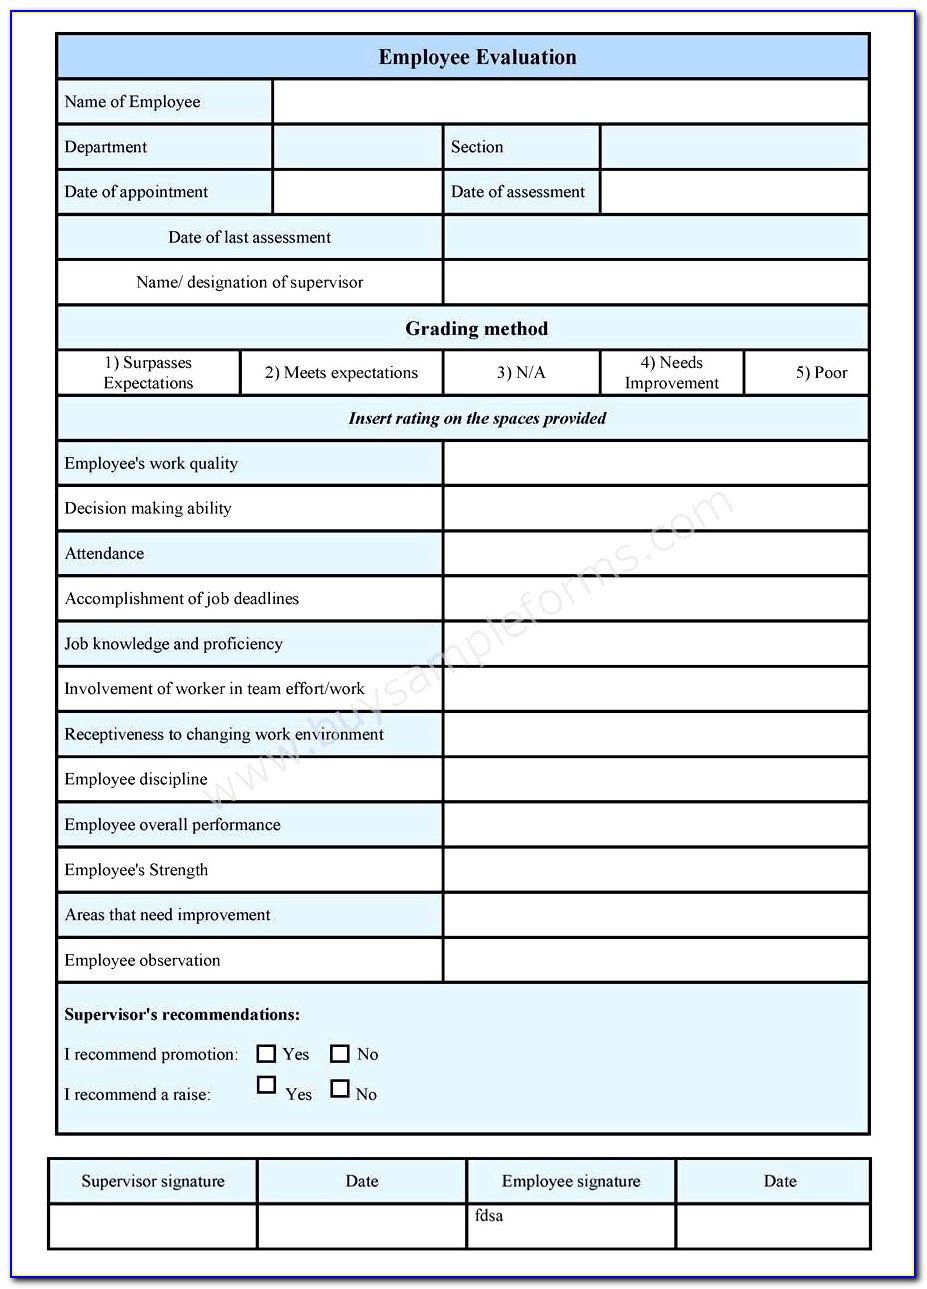 Employee Evaluation Form Pdf Free